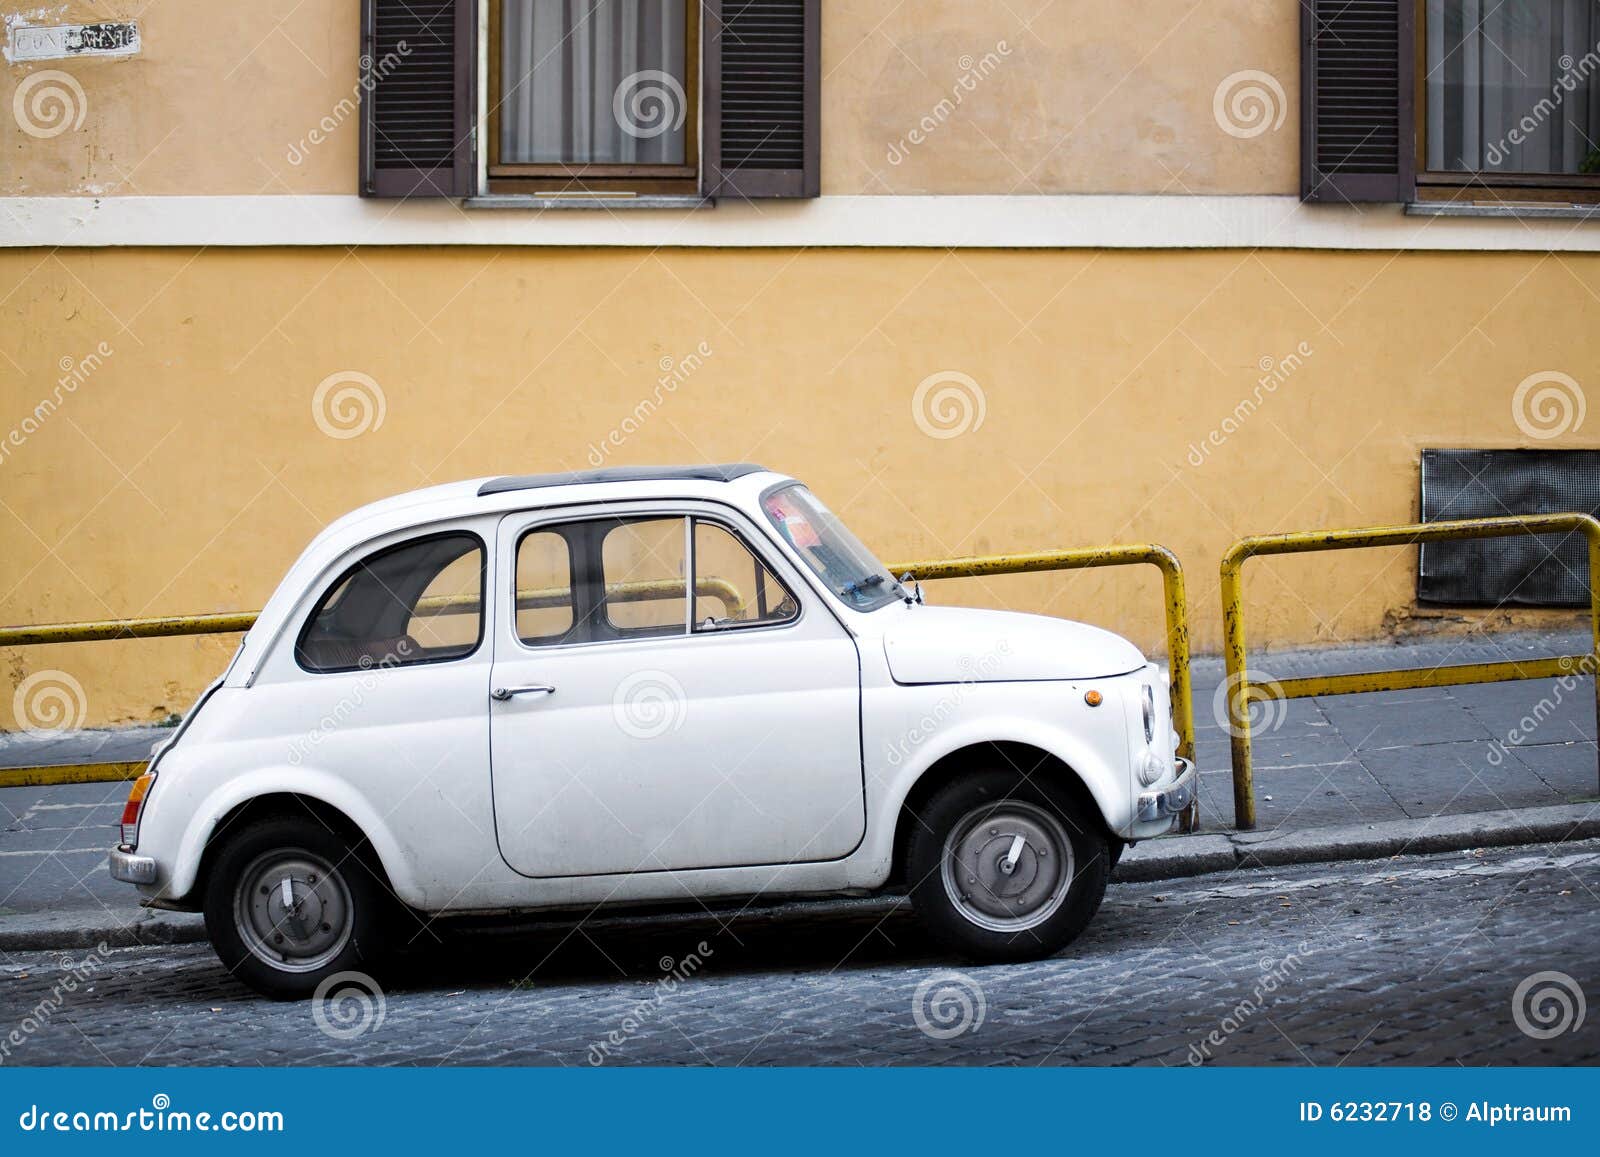 compact car on italian street